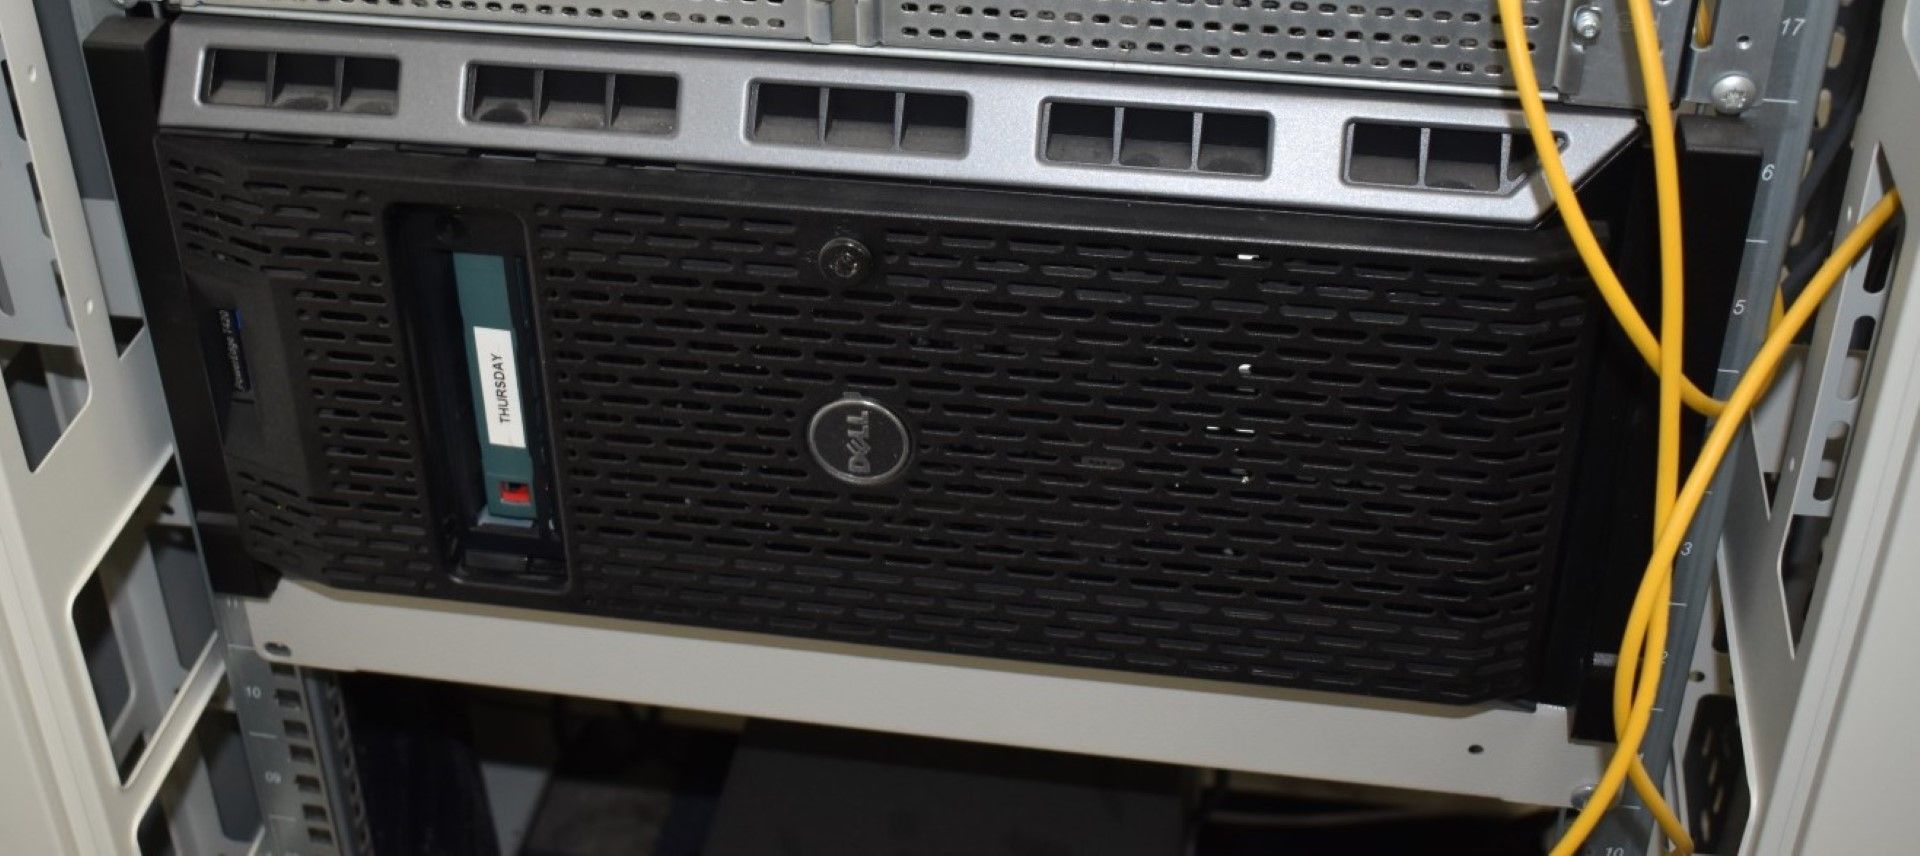 1 x Server DATA Rack Cabinet With Dell Power Edge T420 Server, Cisco 2921, Alcatel OS6250-8M, Adva - Image 8 of 22